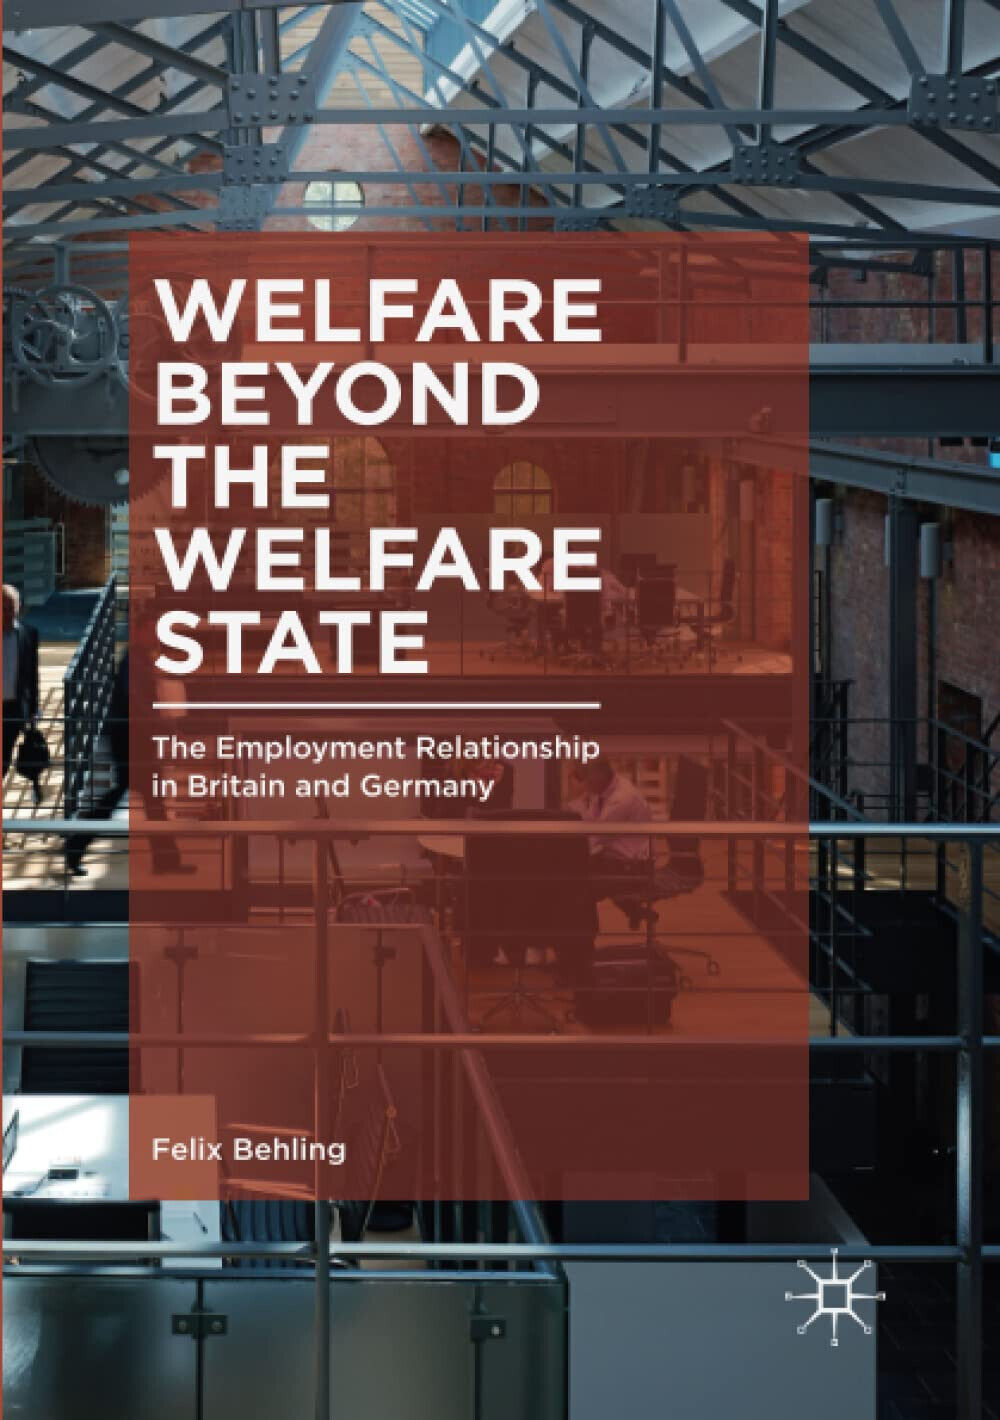 Welfare Beyond the Welfare State - Felix Behling - Palgrave, 2019